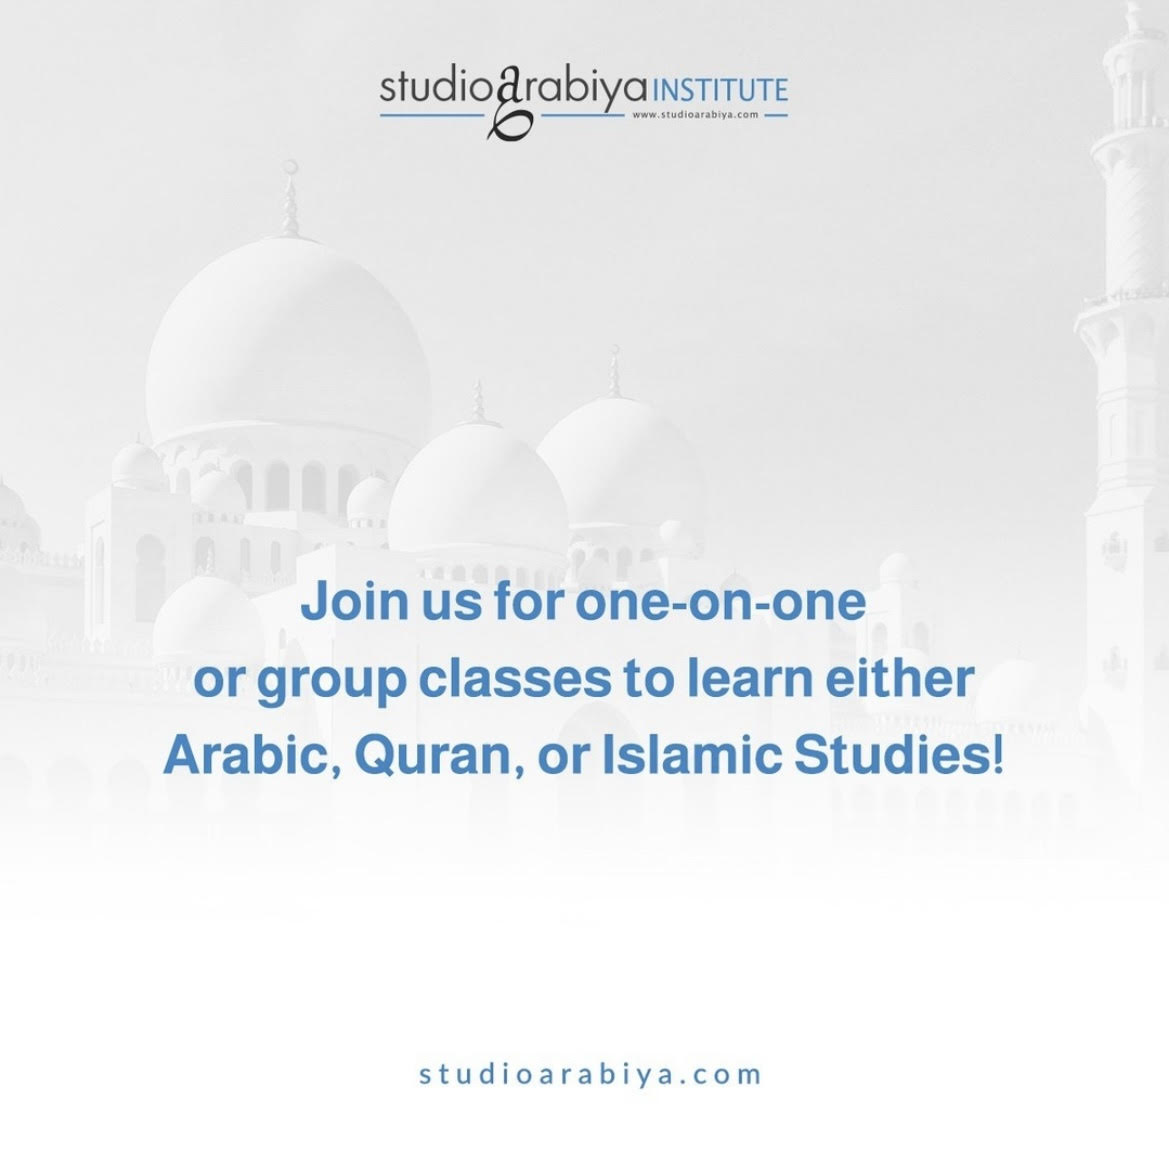 It's time for #TajweedTuesday! 😀 Let's learn about Madd Al-Badal! 👀

#tajweedtuesday #studioarabiya #studioarabiyaonline #arabic #arabiconline #learnarabic #islam #islamonline #quran #quranonline #learnquran #tajweed #learntajweed #islamic #muslim